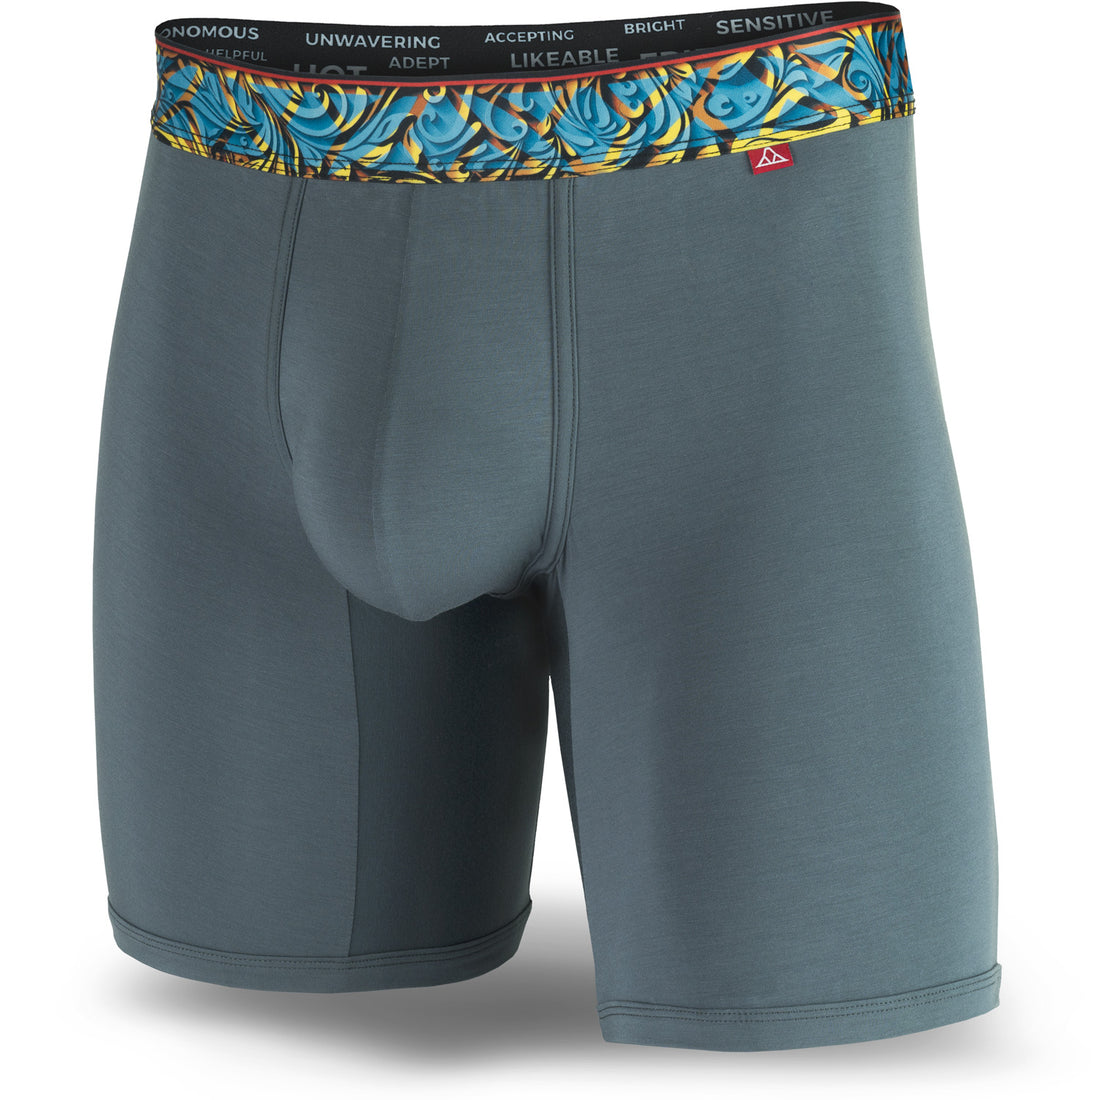 You Look Great When You Feel Great. – Krakatoa Underwear